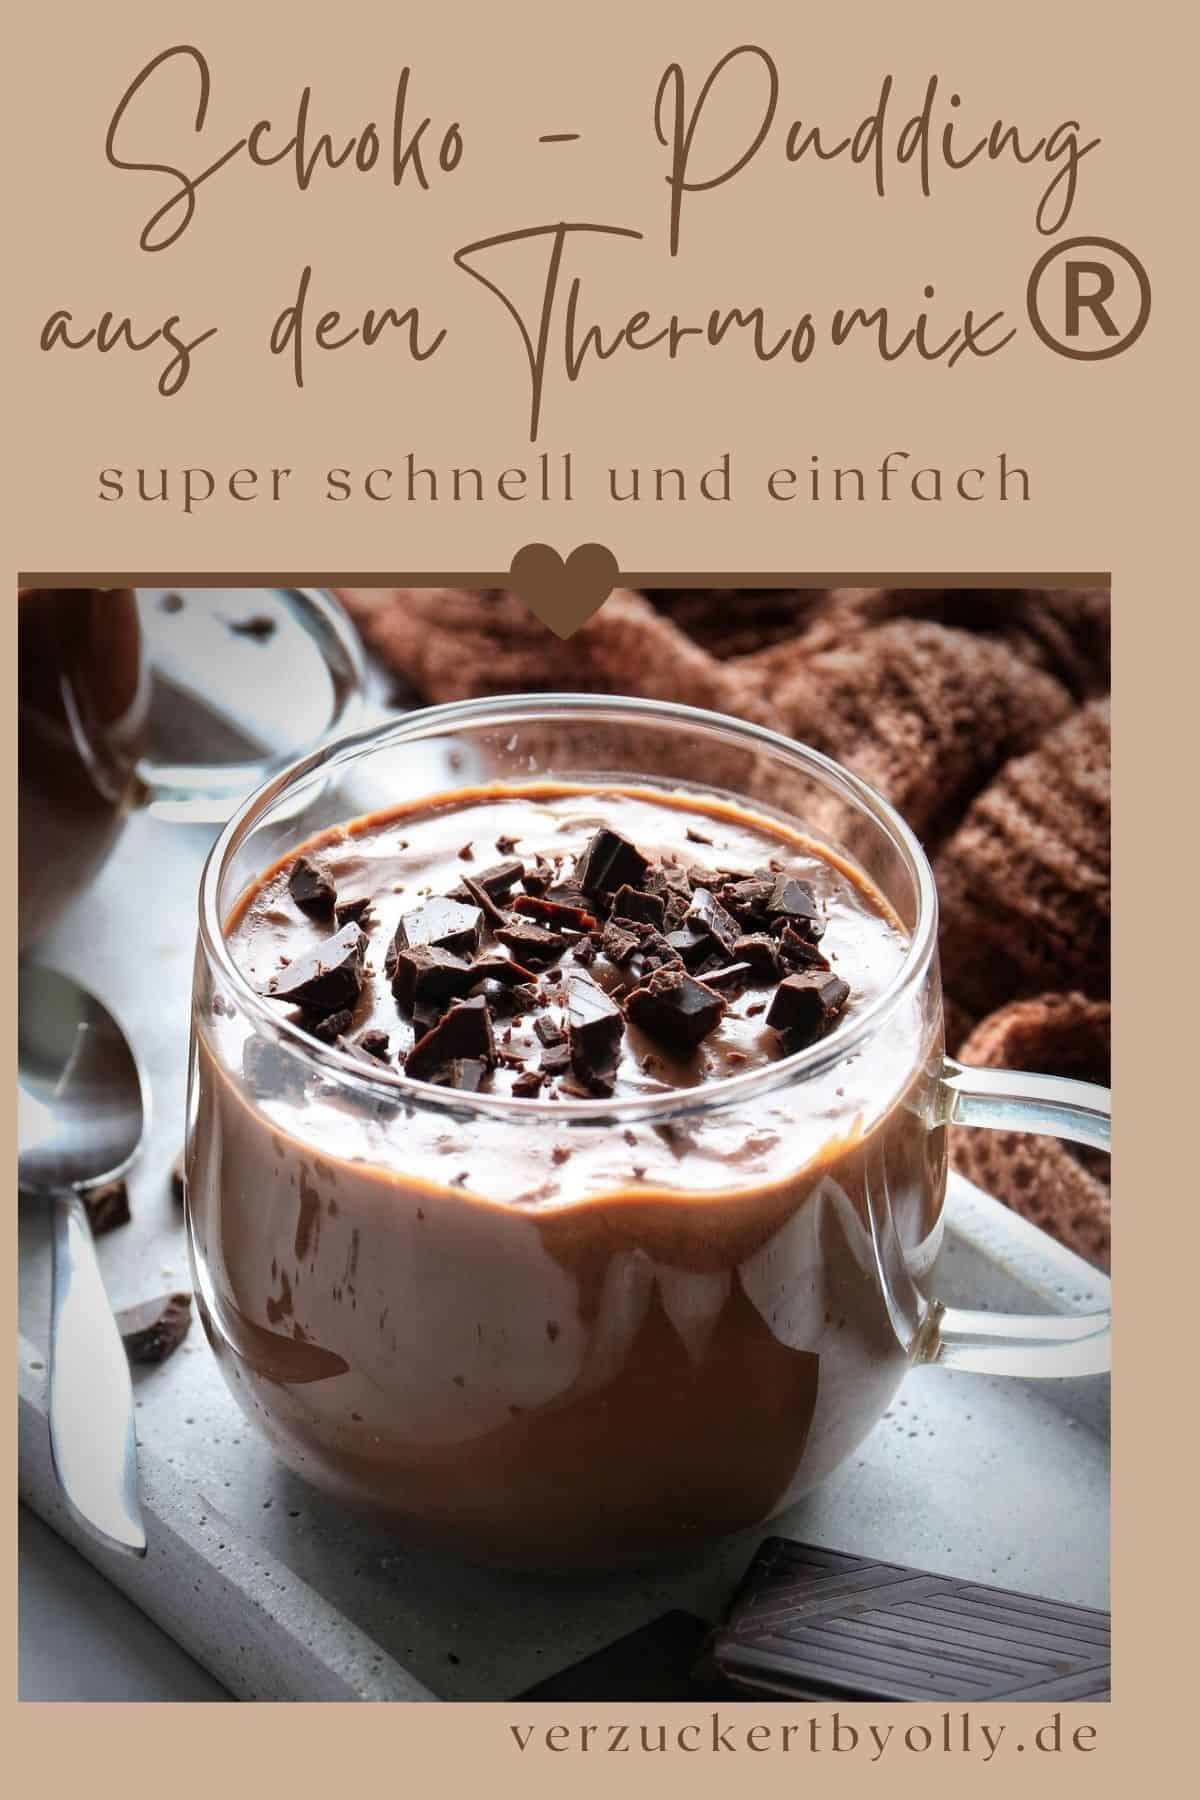 Pin zu Pinterest: Schokoladenpudding im Thermomix®